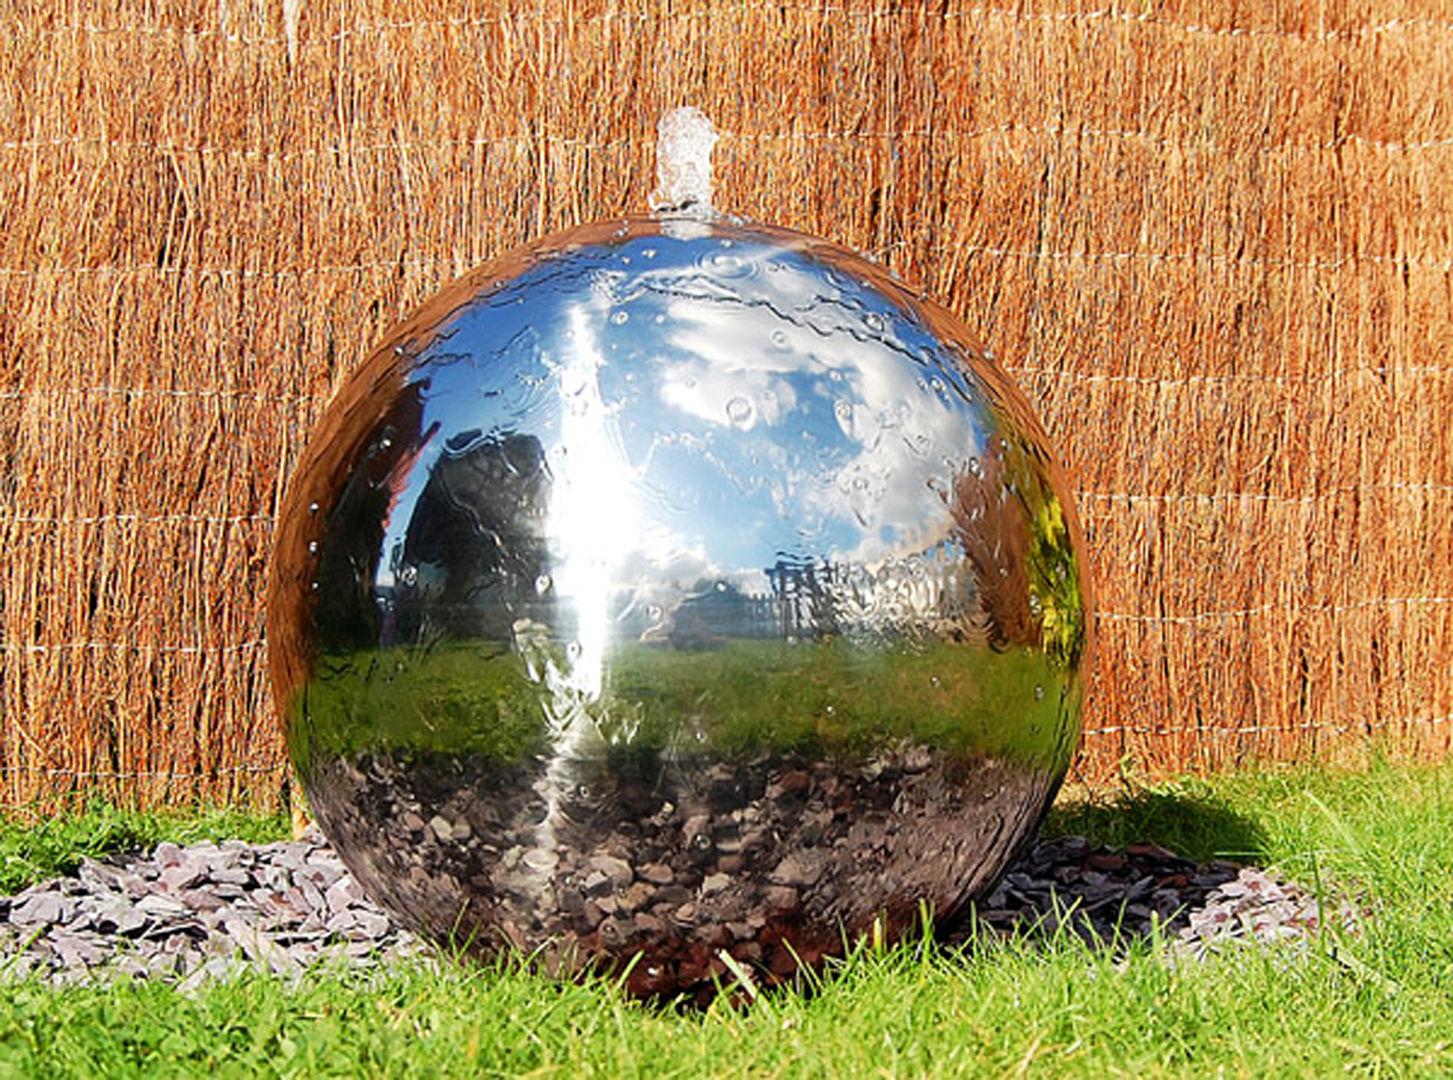 Polished 28cm Stainless Steel Sphere Water Feature Primrose حديقة ديكورات واكسسوارات